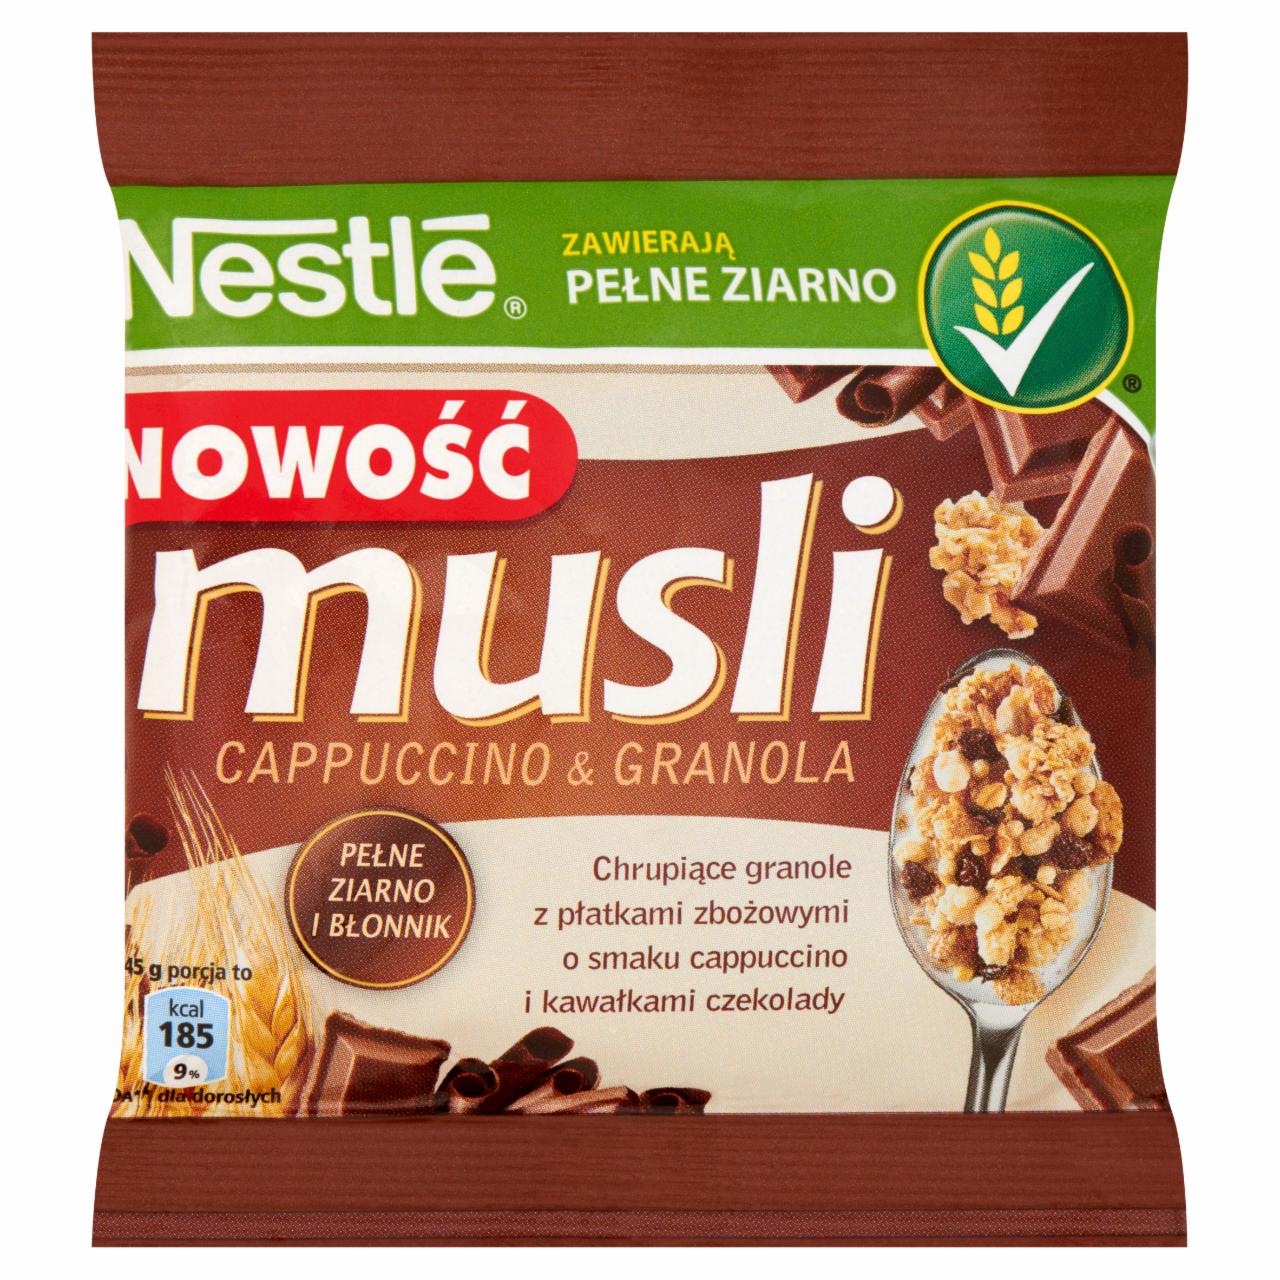 Zdjęcia - Nestlé Musli Cappuccino i granola 45 g